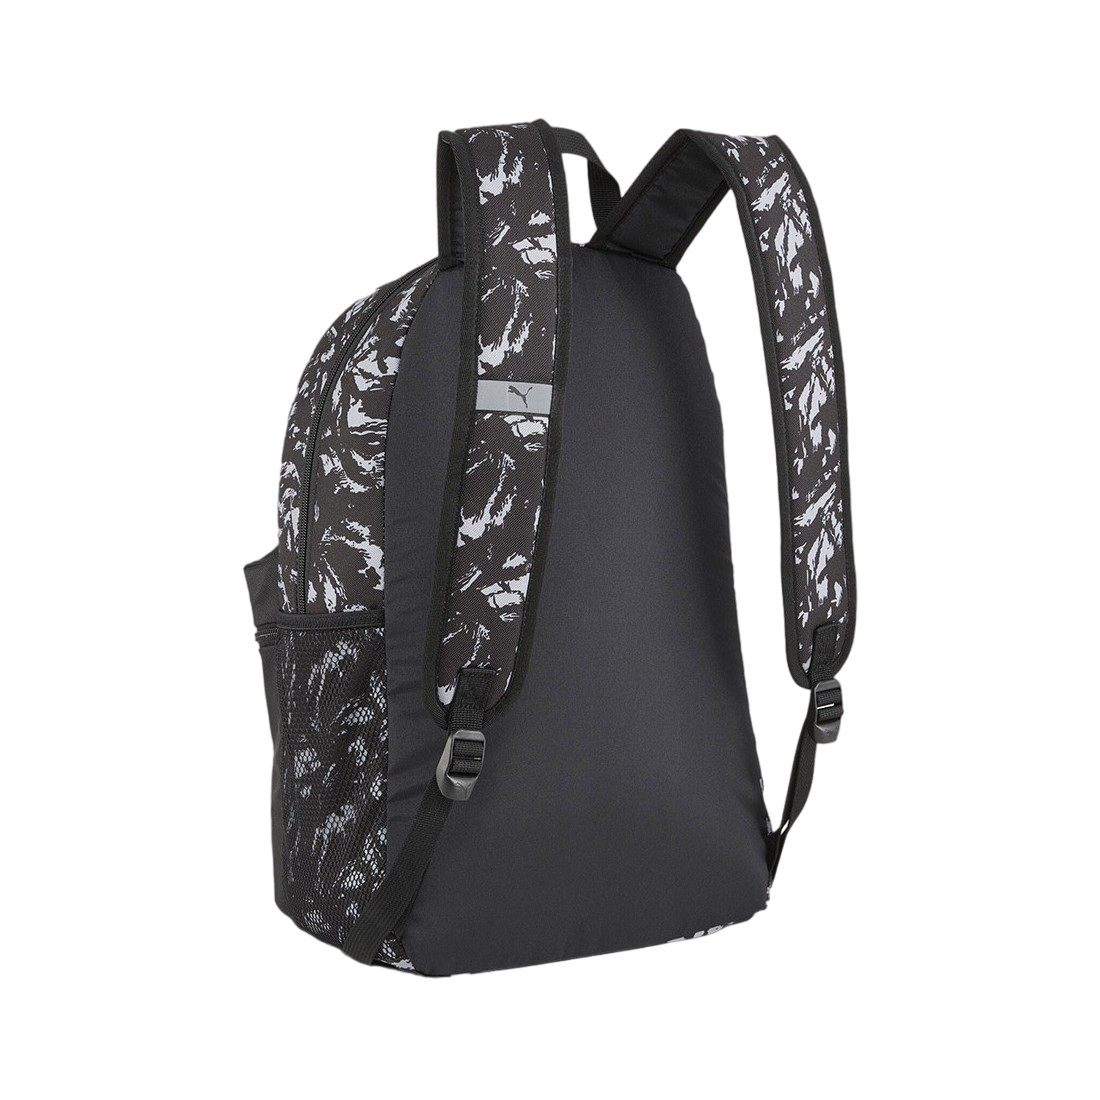 Puma multipurpose backpack Phase 079948-07 black-grey